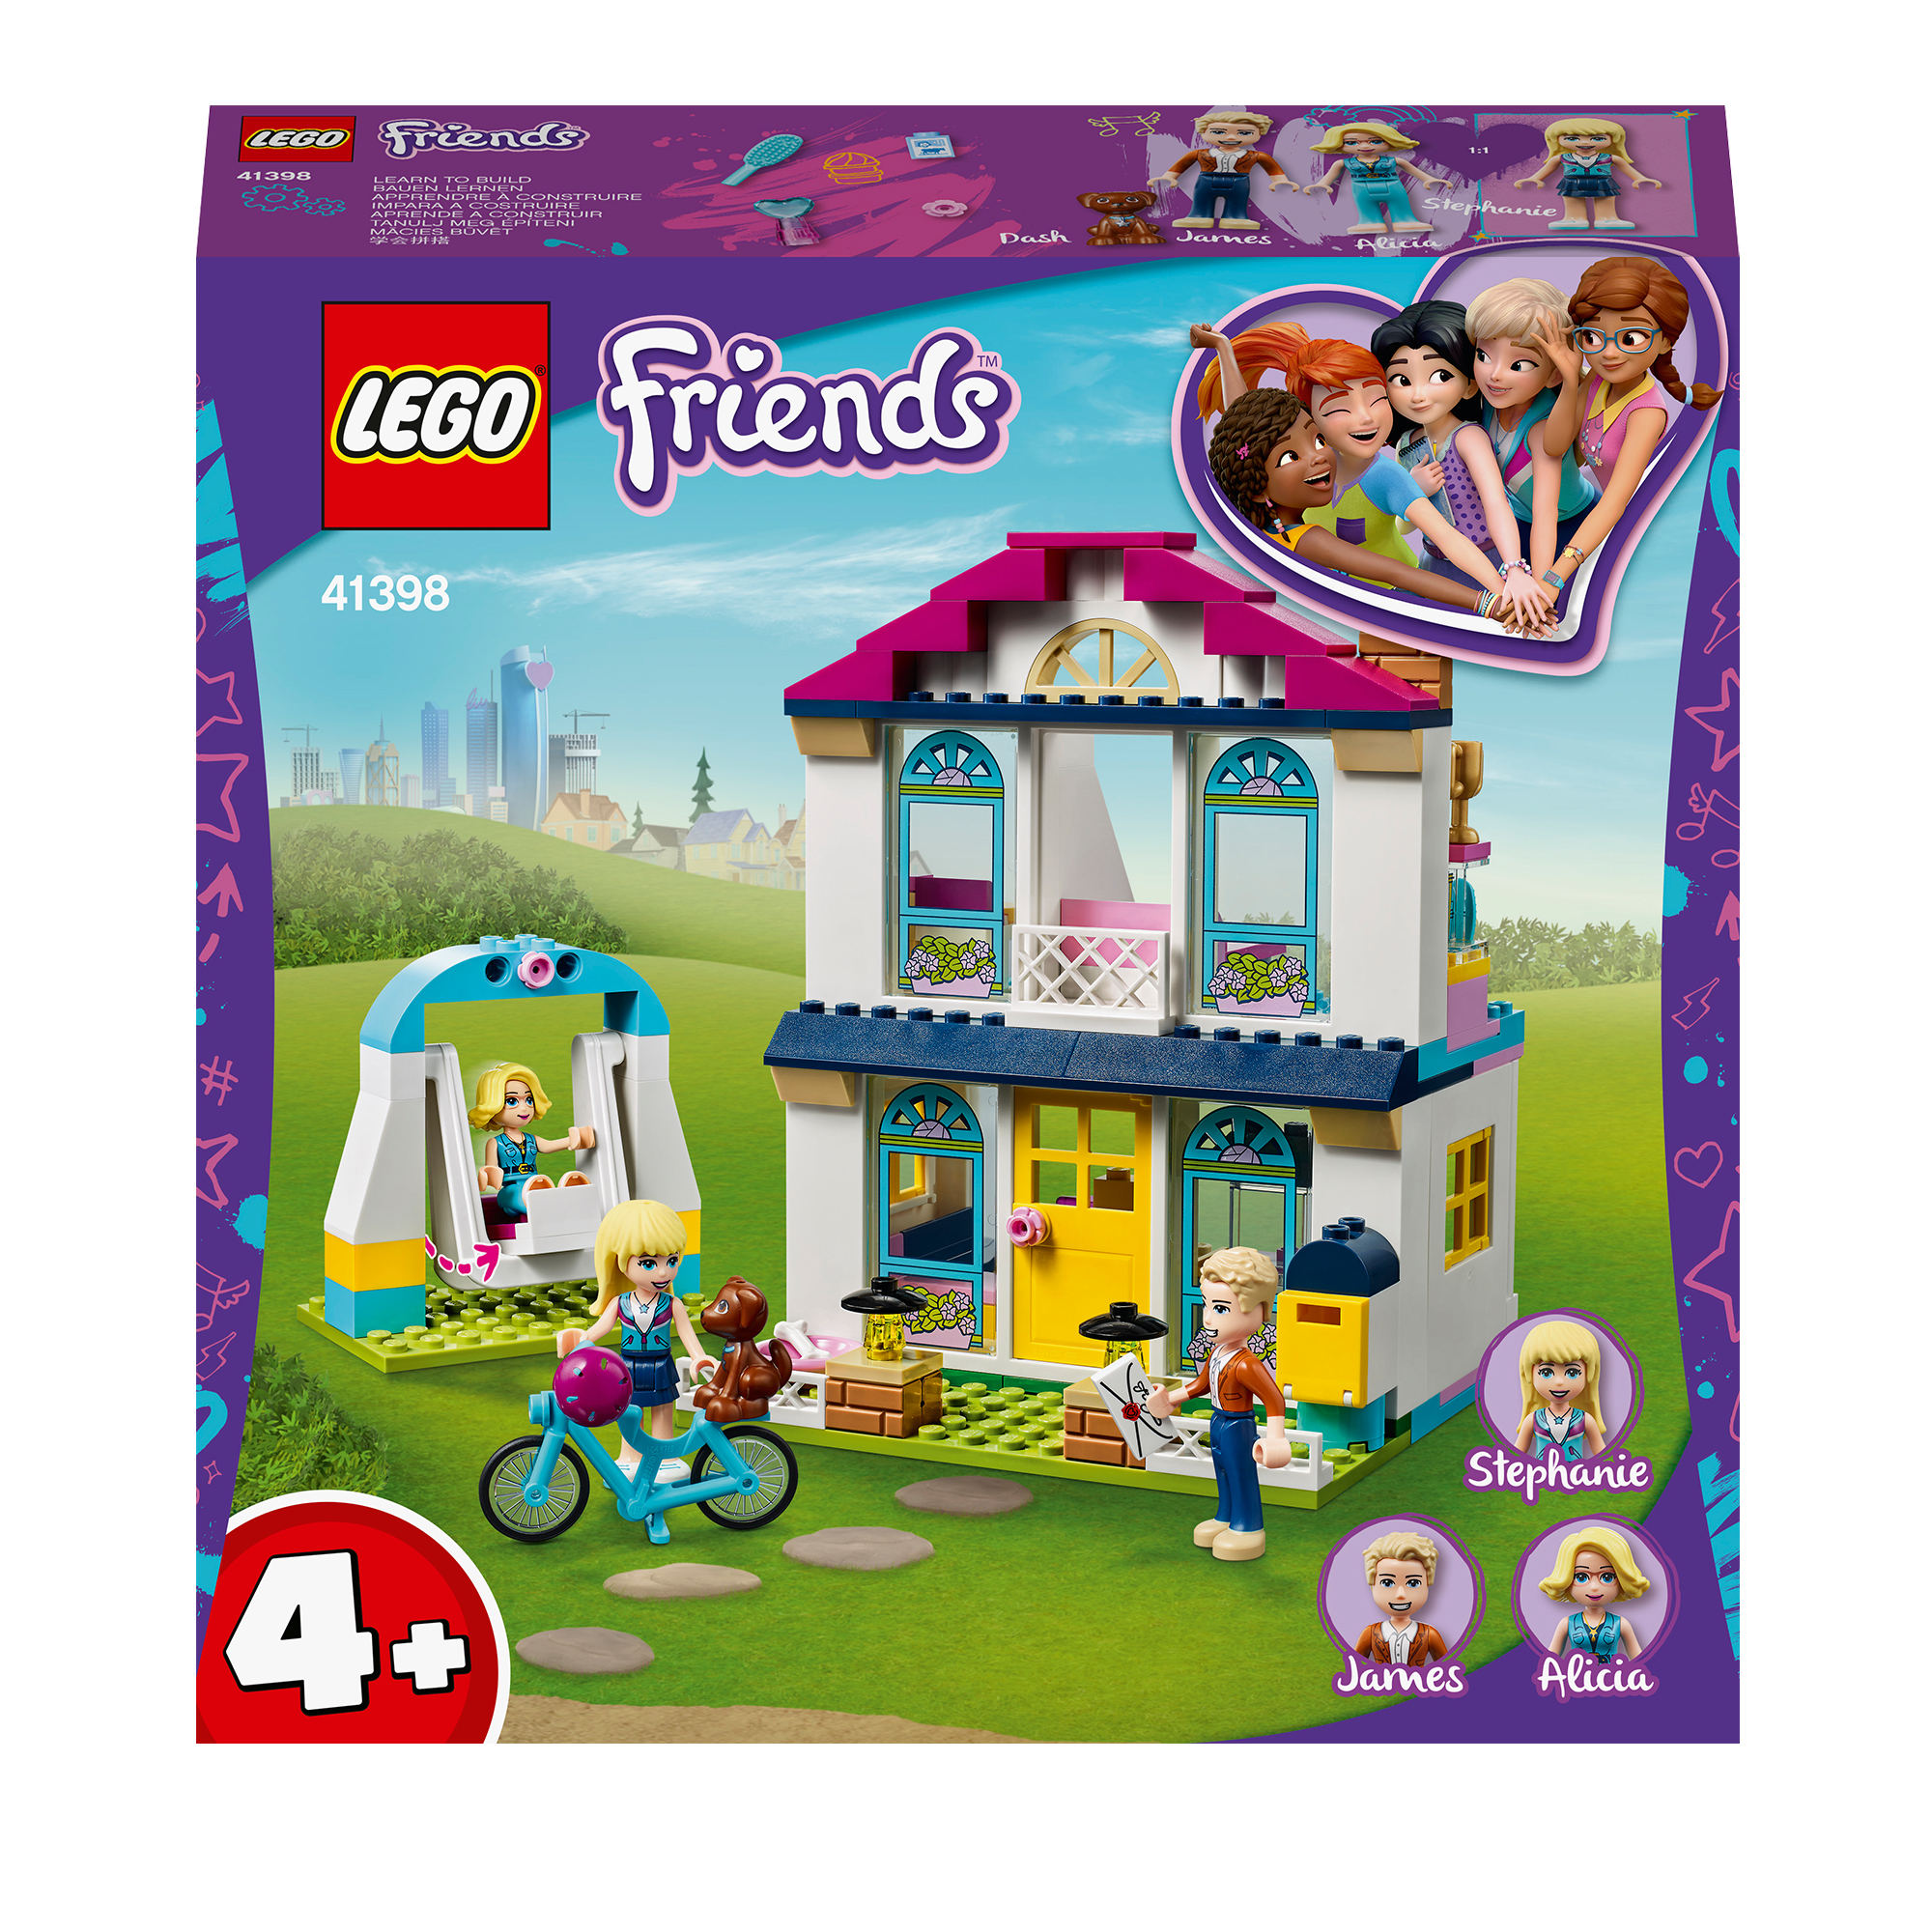 LEGO Friends 4+ – Stephanies Familienhaus